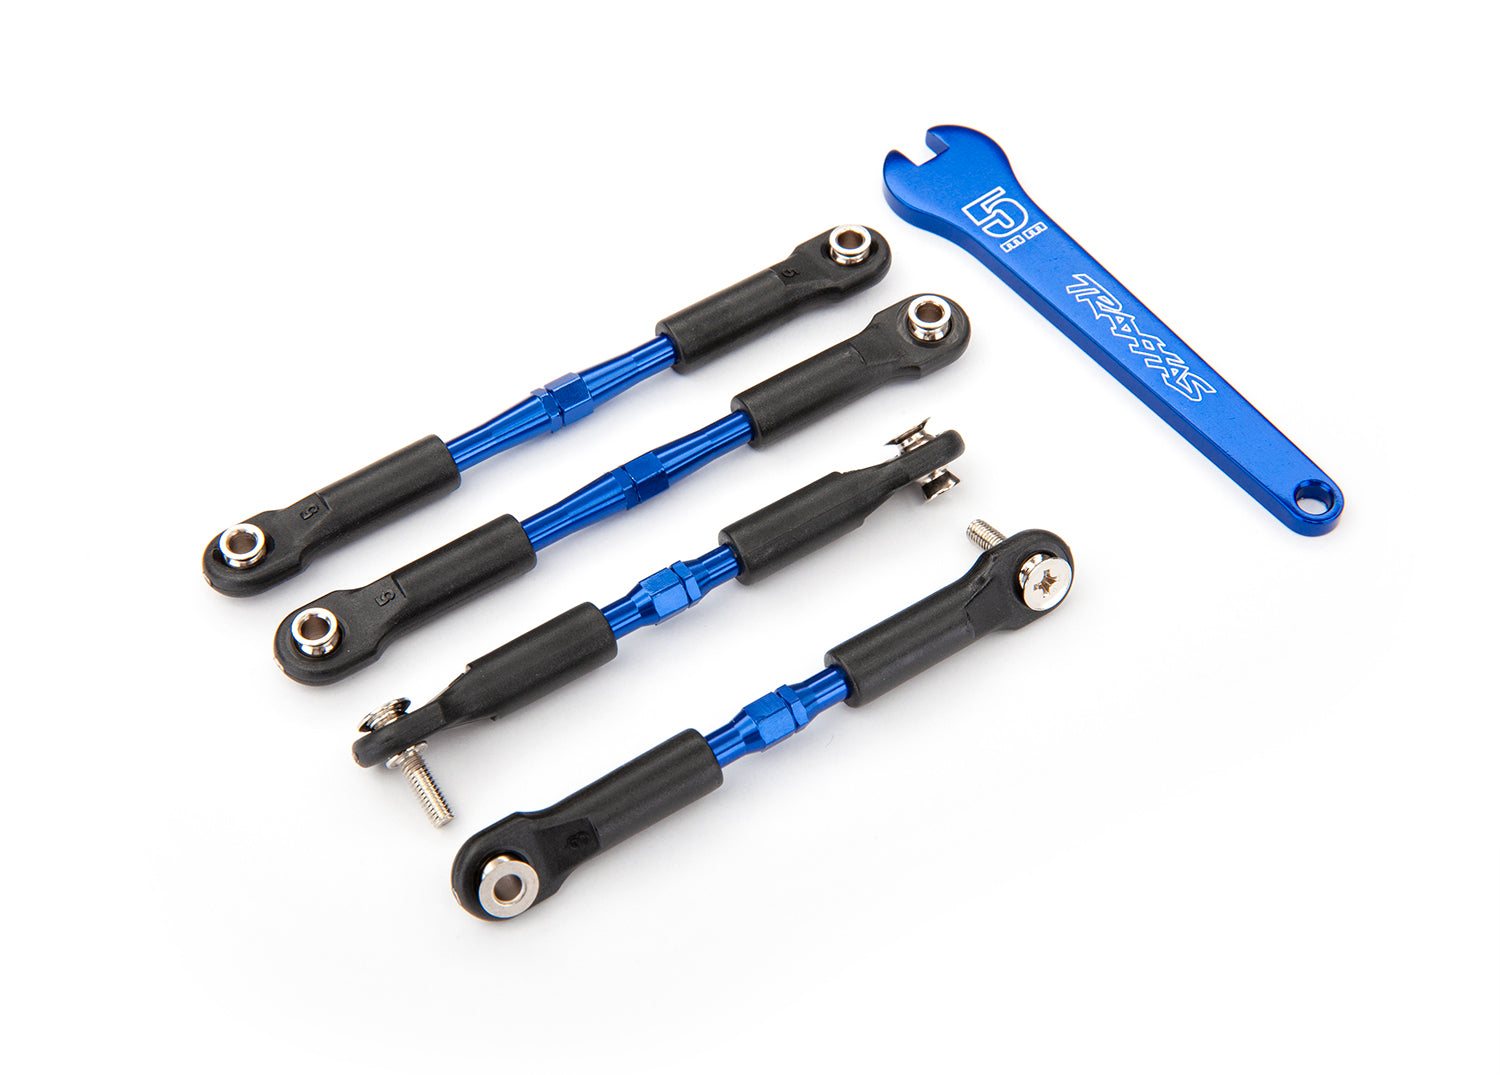 Traxxas Aluminum Turnbuckle Camber Link Set (Blue) (4)